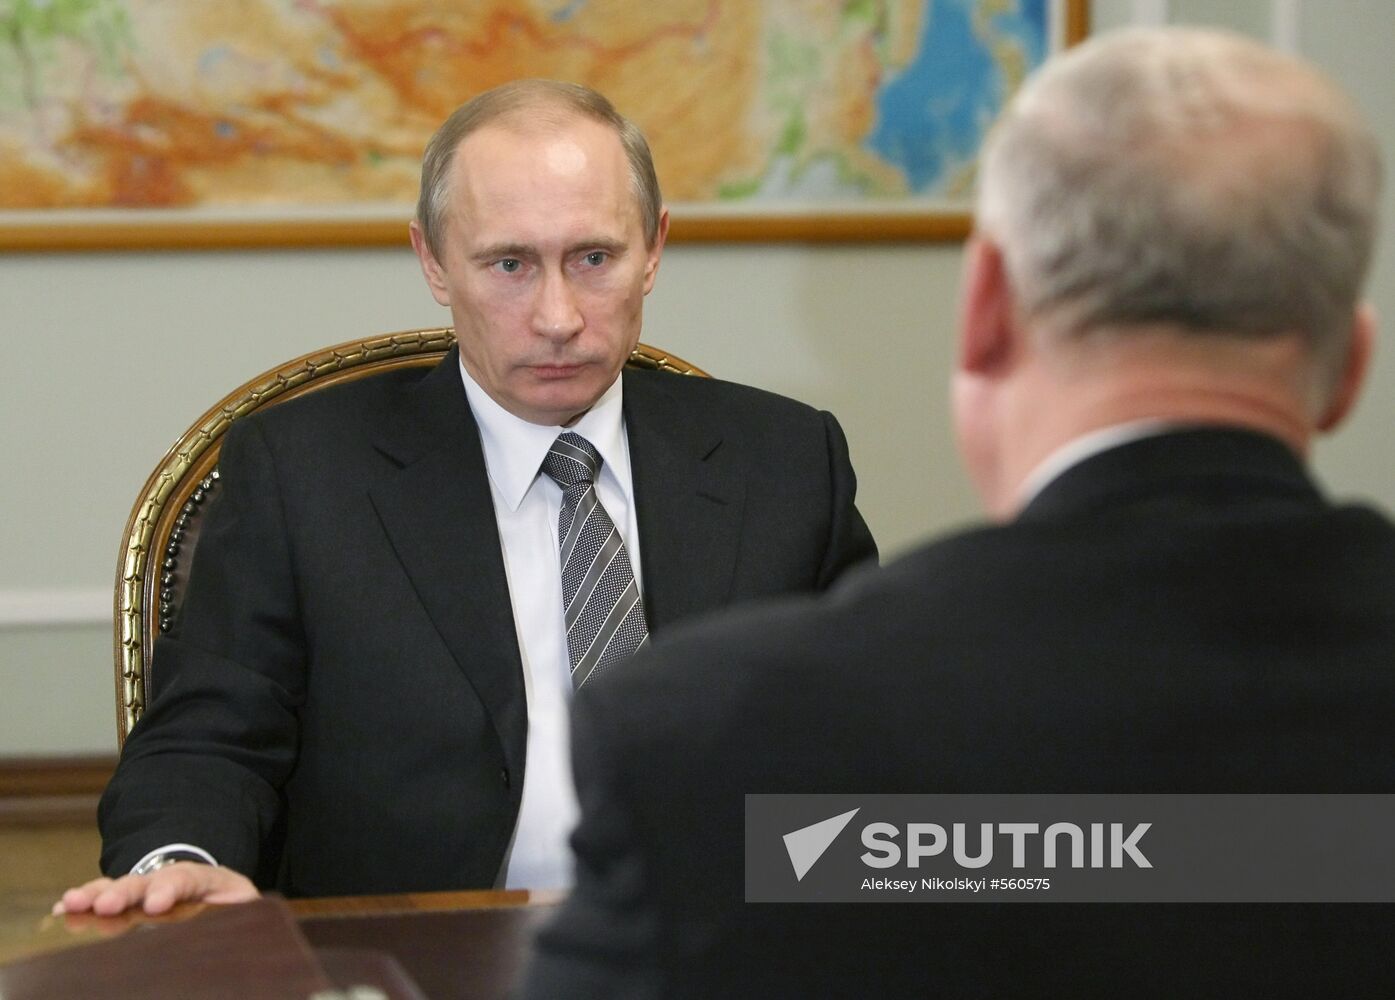 Vladimir Putin meets with Vladimir Grodetsky